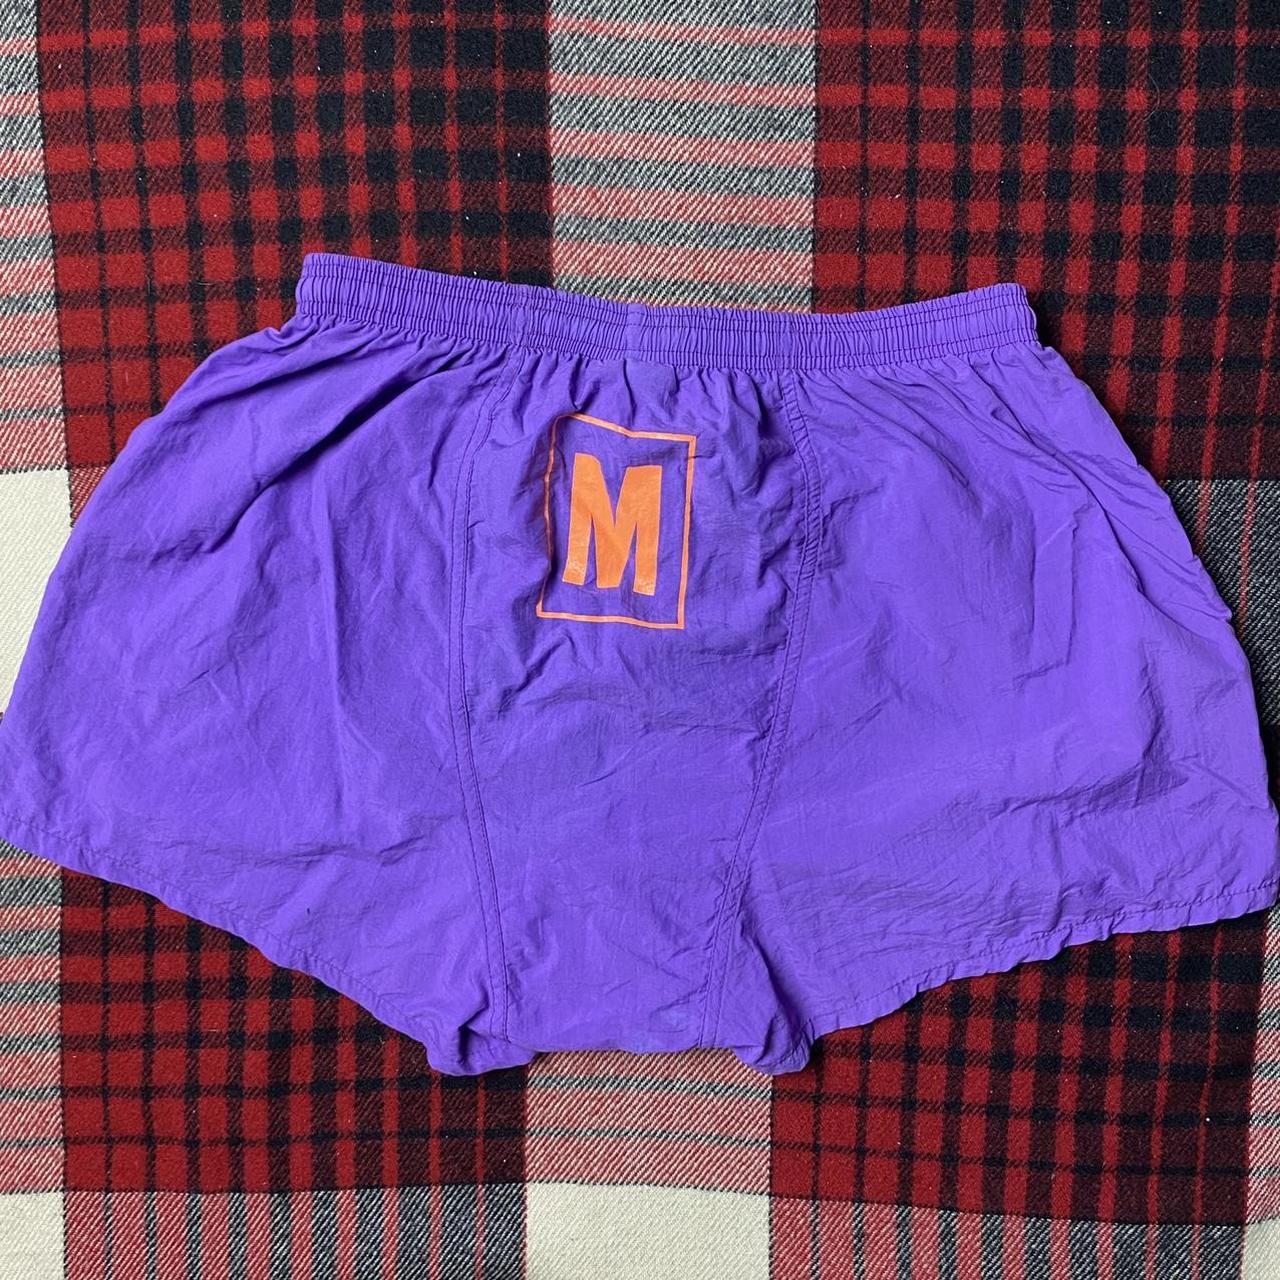 Mossimo Men's Purple Shorts (3)